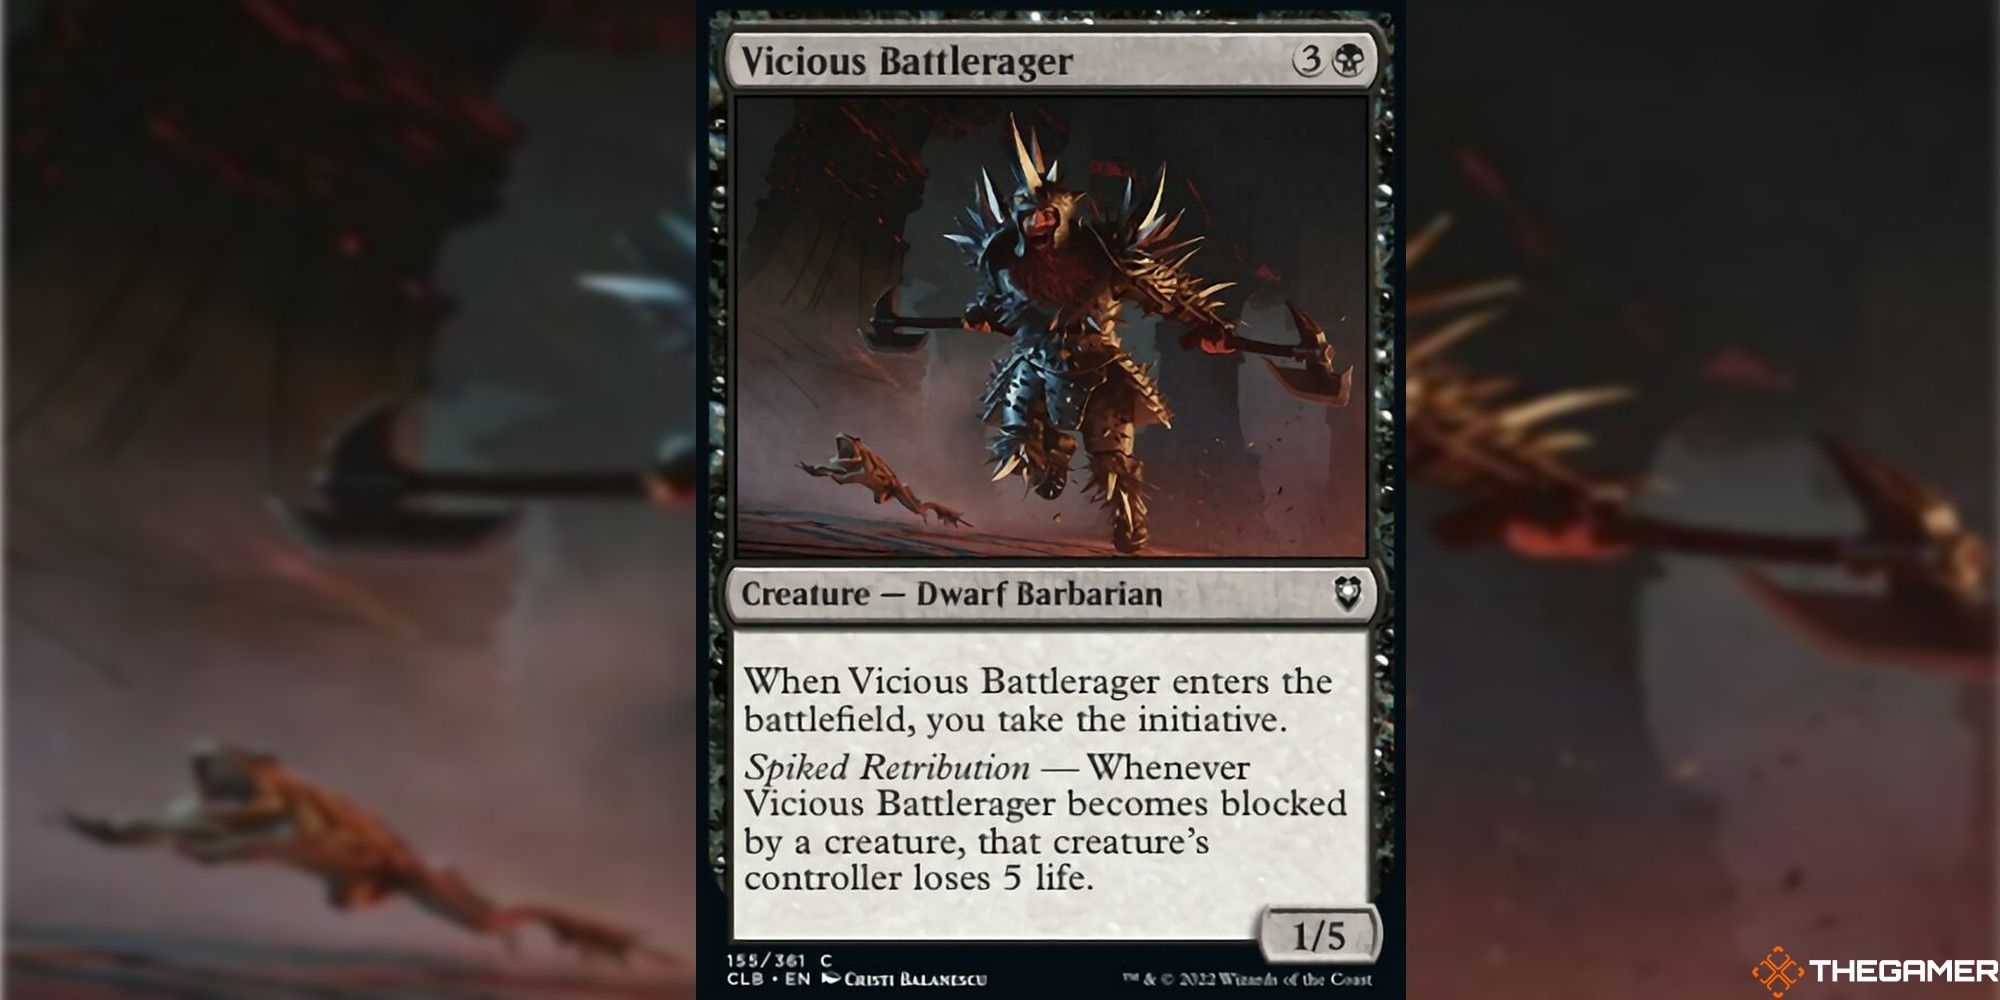 mtg Vicious Battlerager card art and text